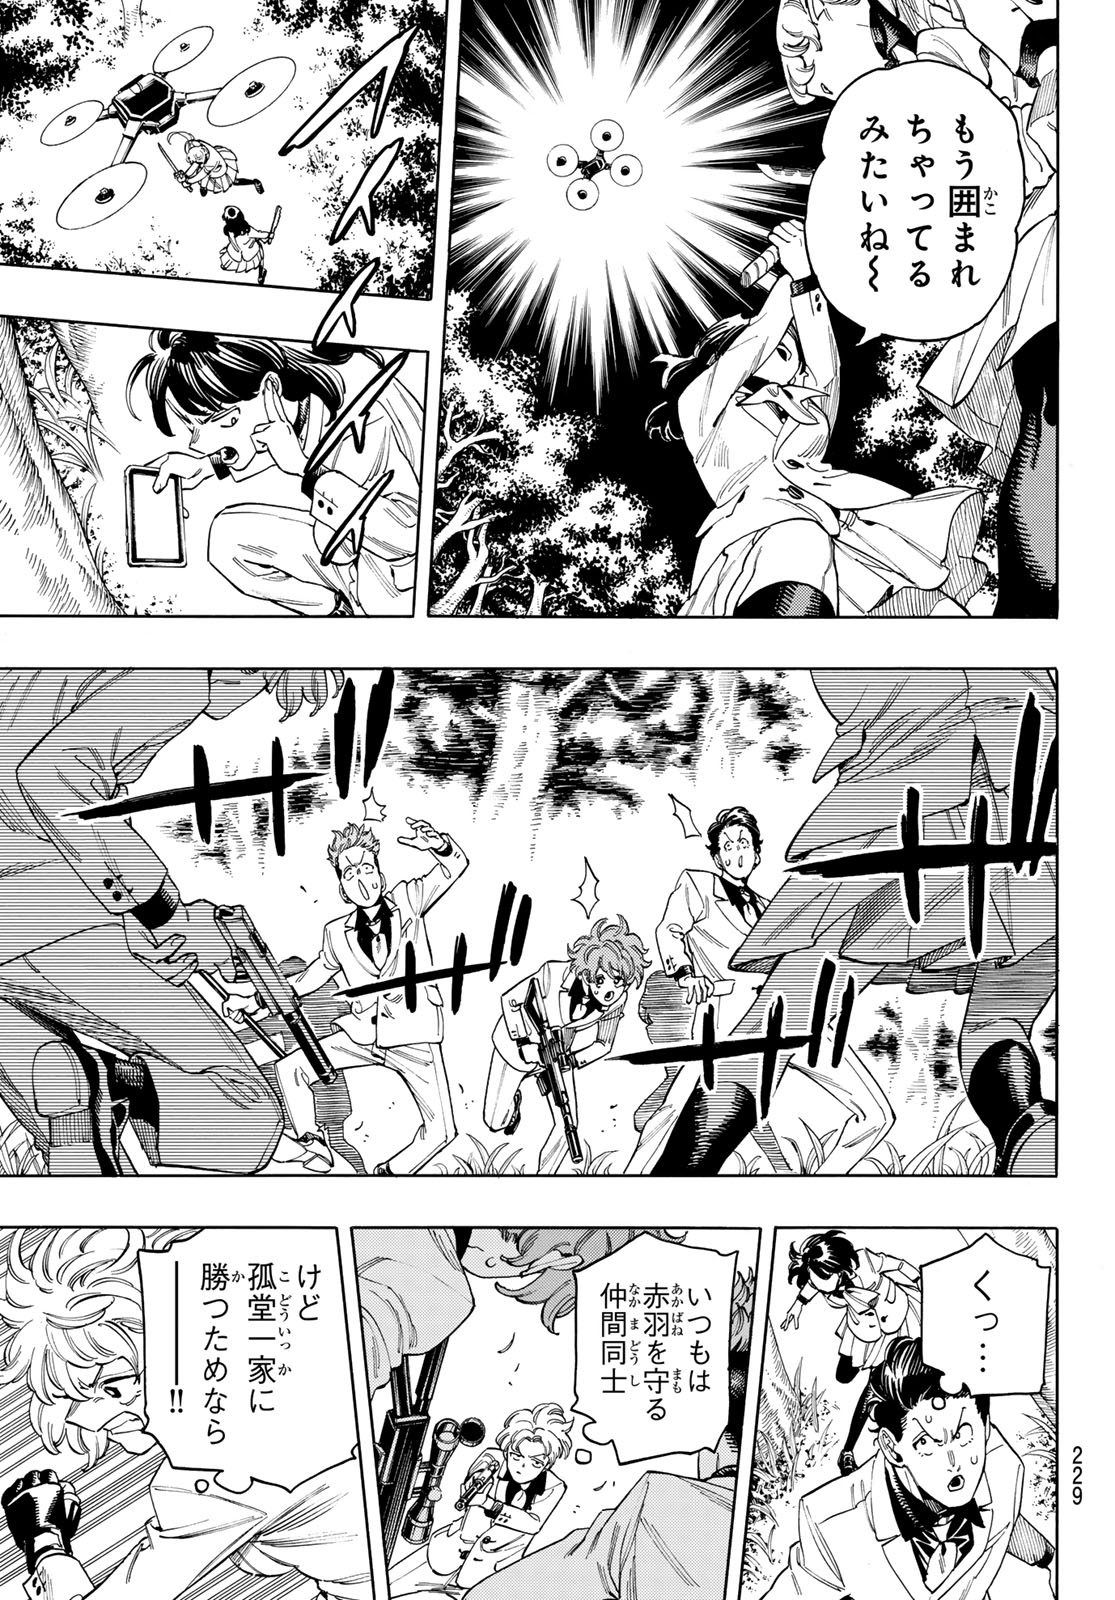 Akabane Honeko no Bodyguard - Chapter 86 - Page 9